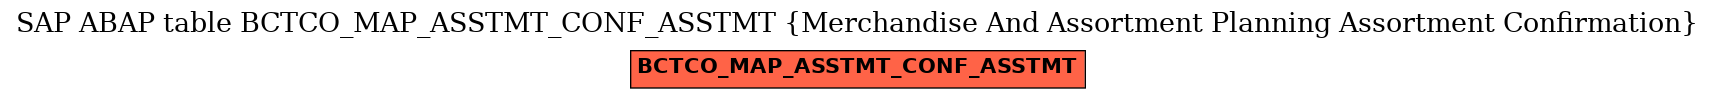 E-R Diagram for table BCTCO_MAP_ASSTMT_CONF_ASSTMT (Merchandise And Assortment Planning Assortment Confirmation)